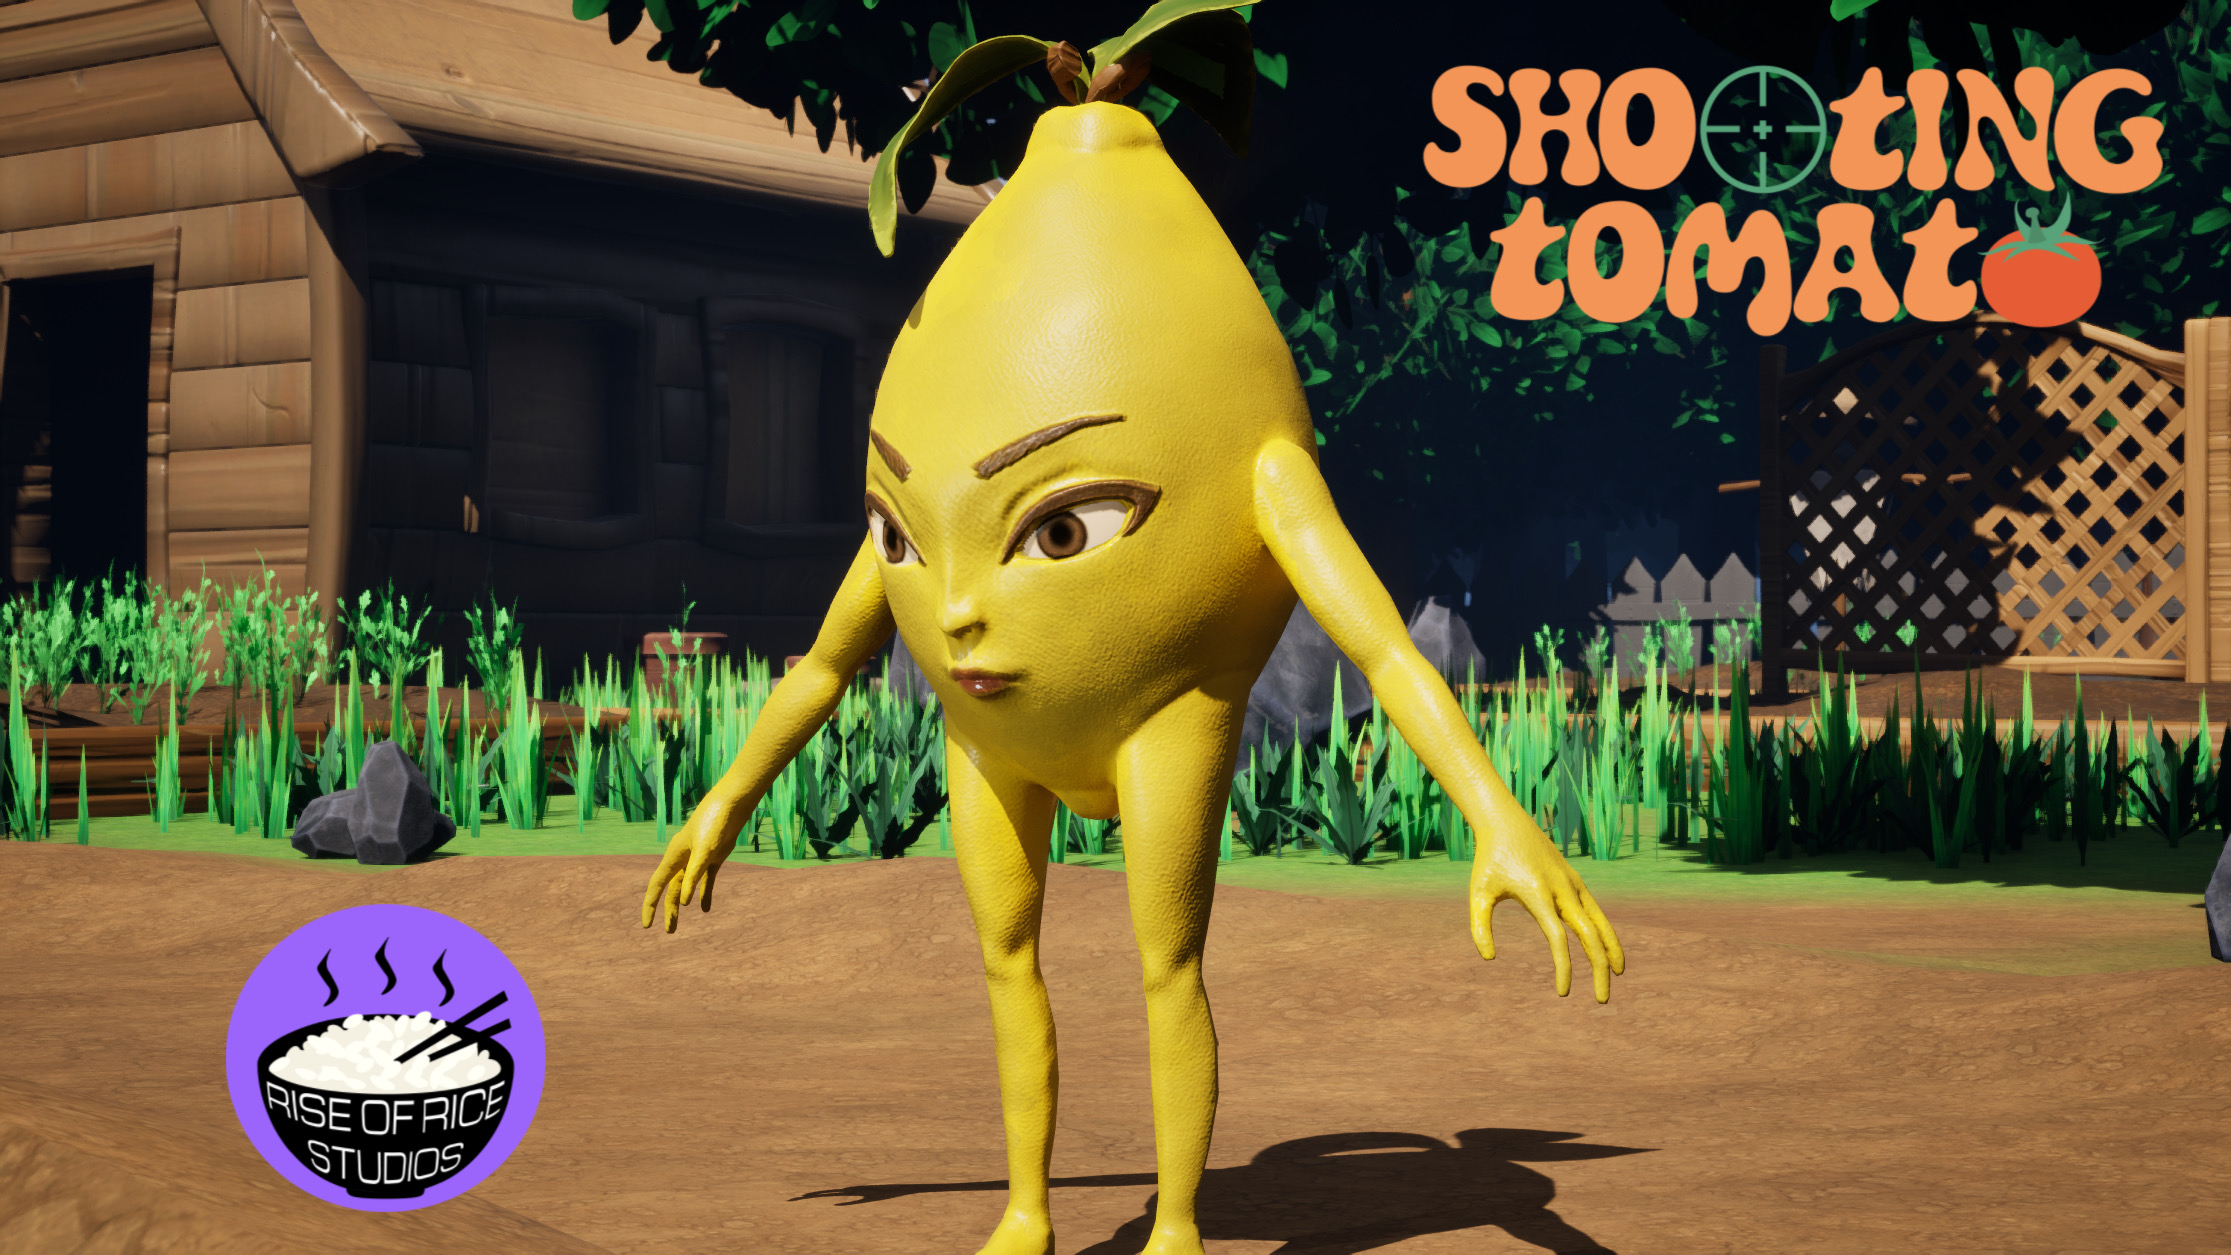 Ingame-Ausschnitt aus dem Spiel Shooting Tomato mit dem Charakter Ashley / Ingame picture out of the game Shooting Tomato of the character Ashley